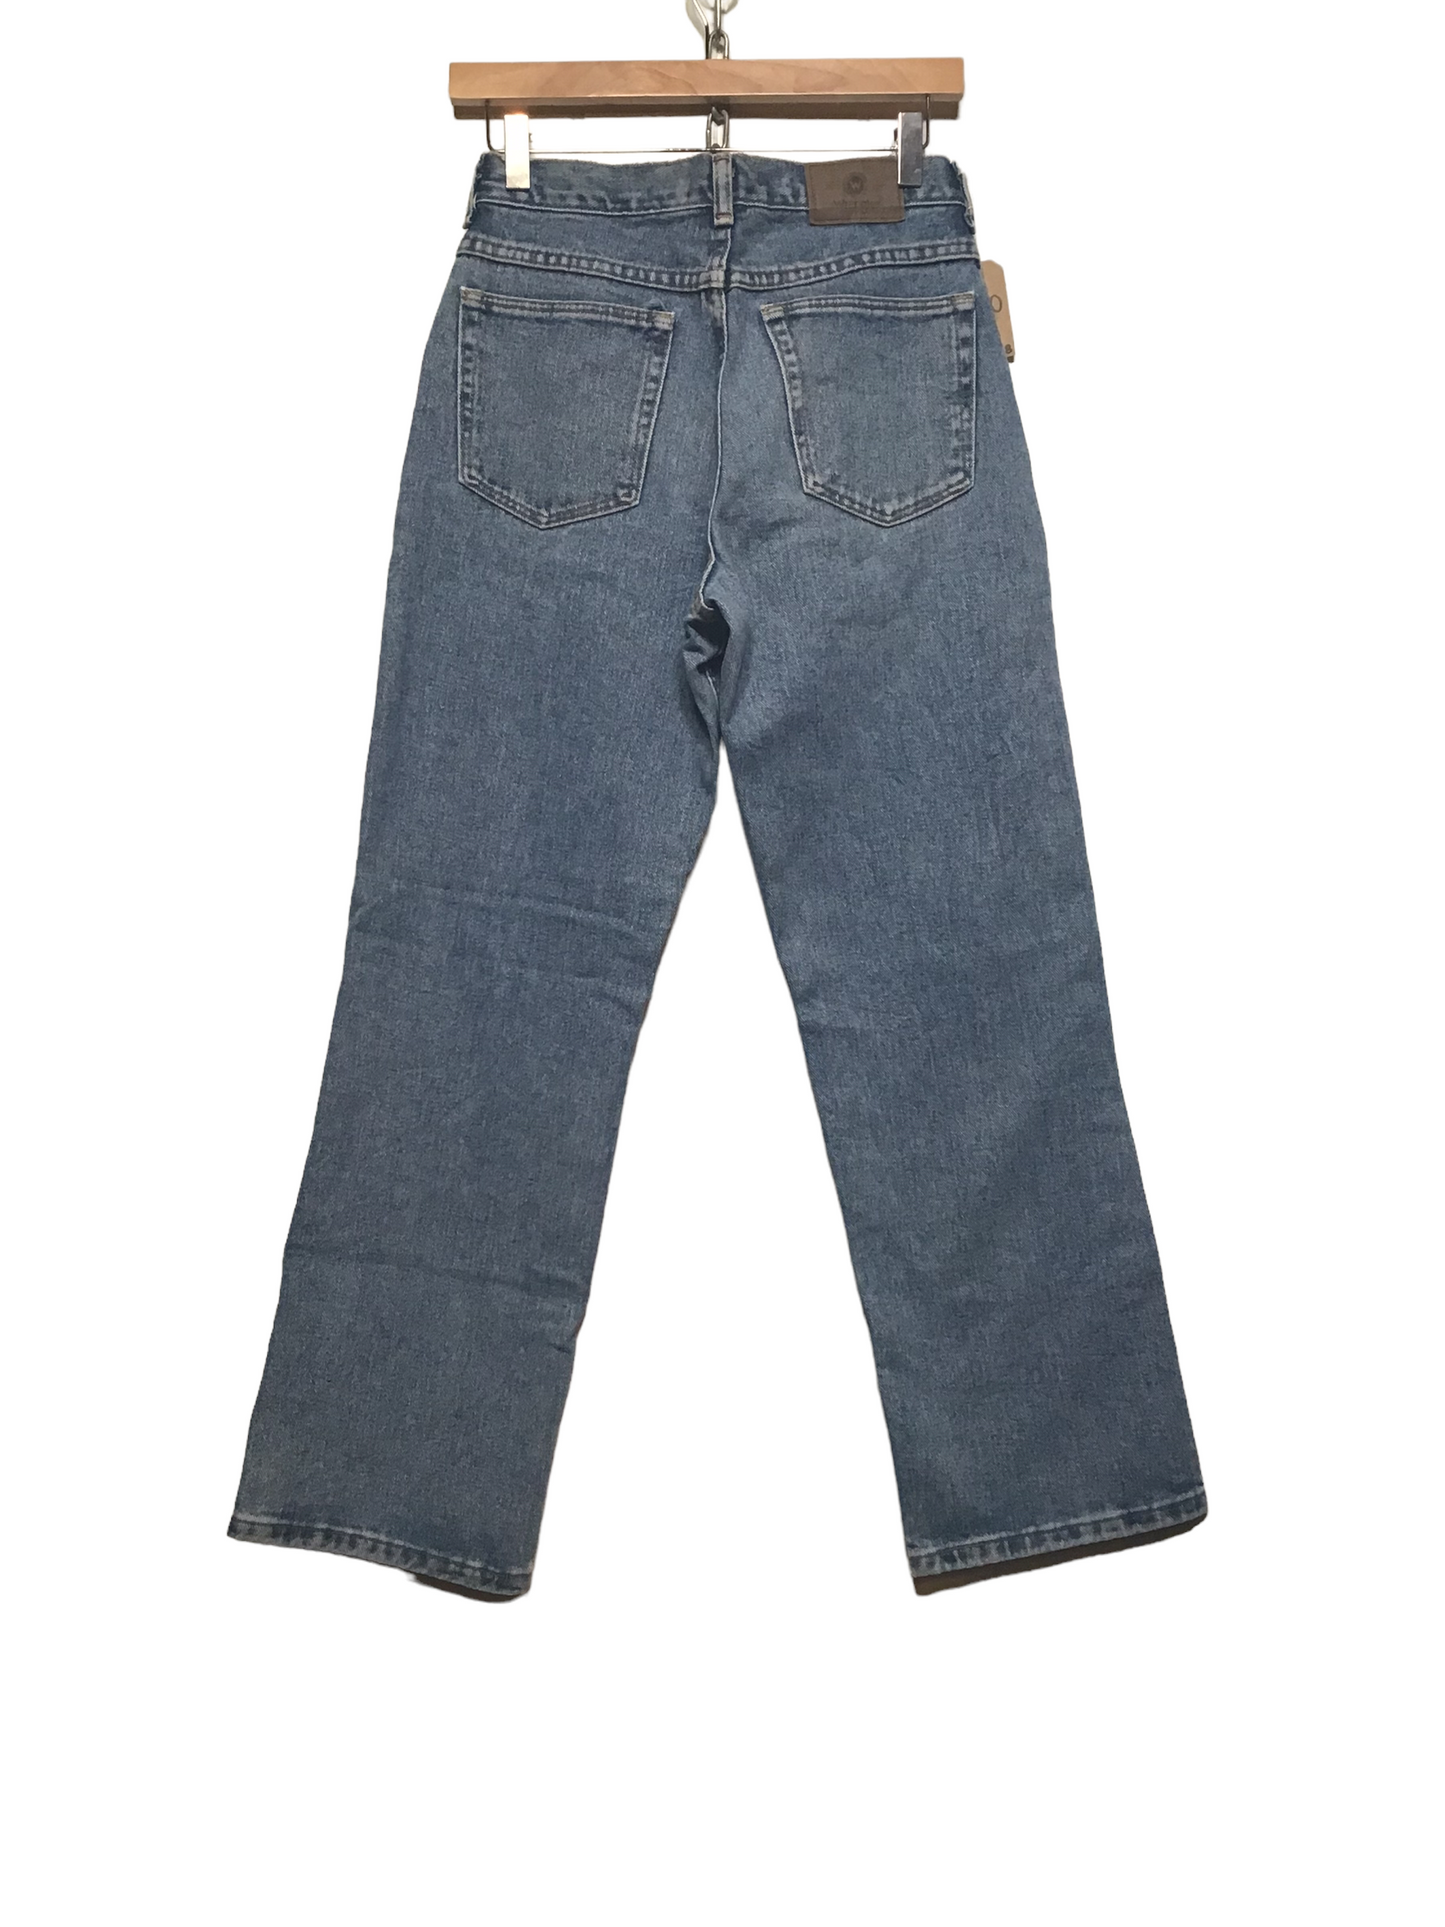 Wrangler Jeans (29X28)